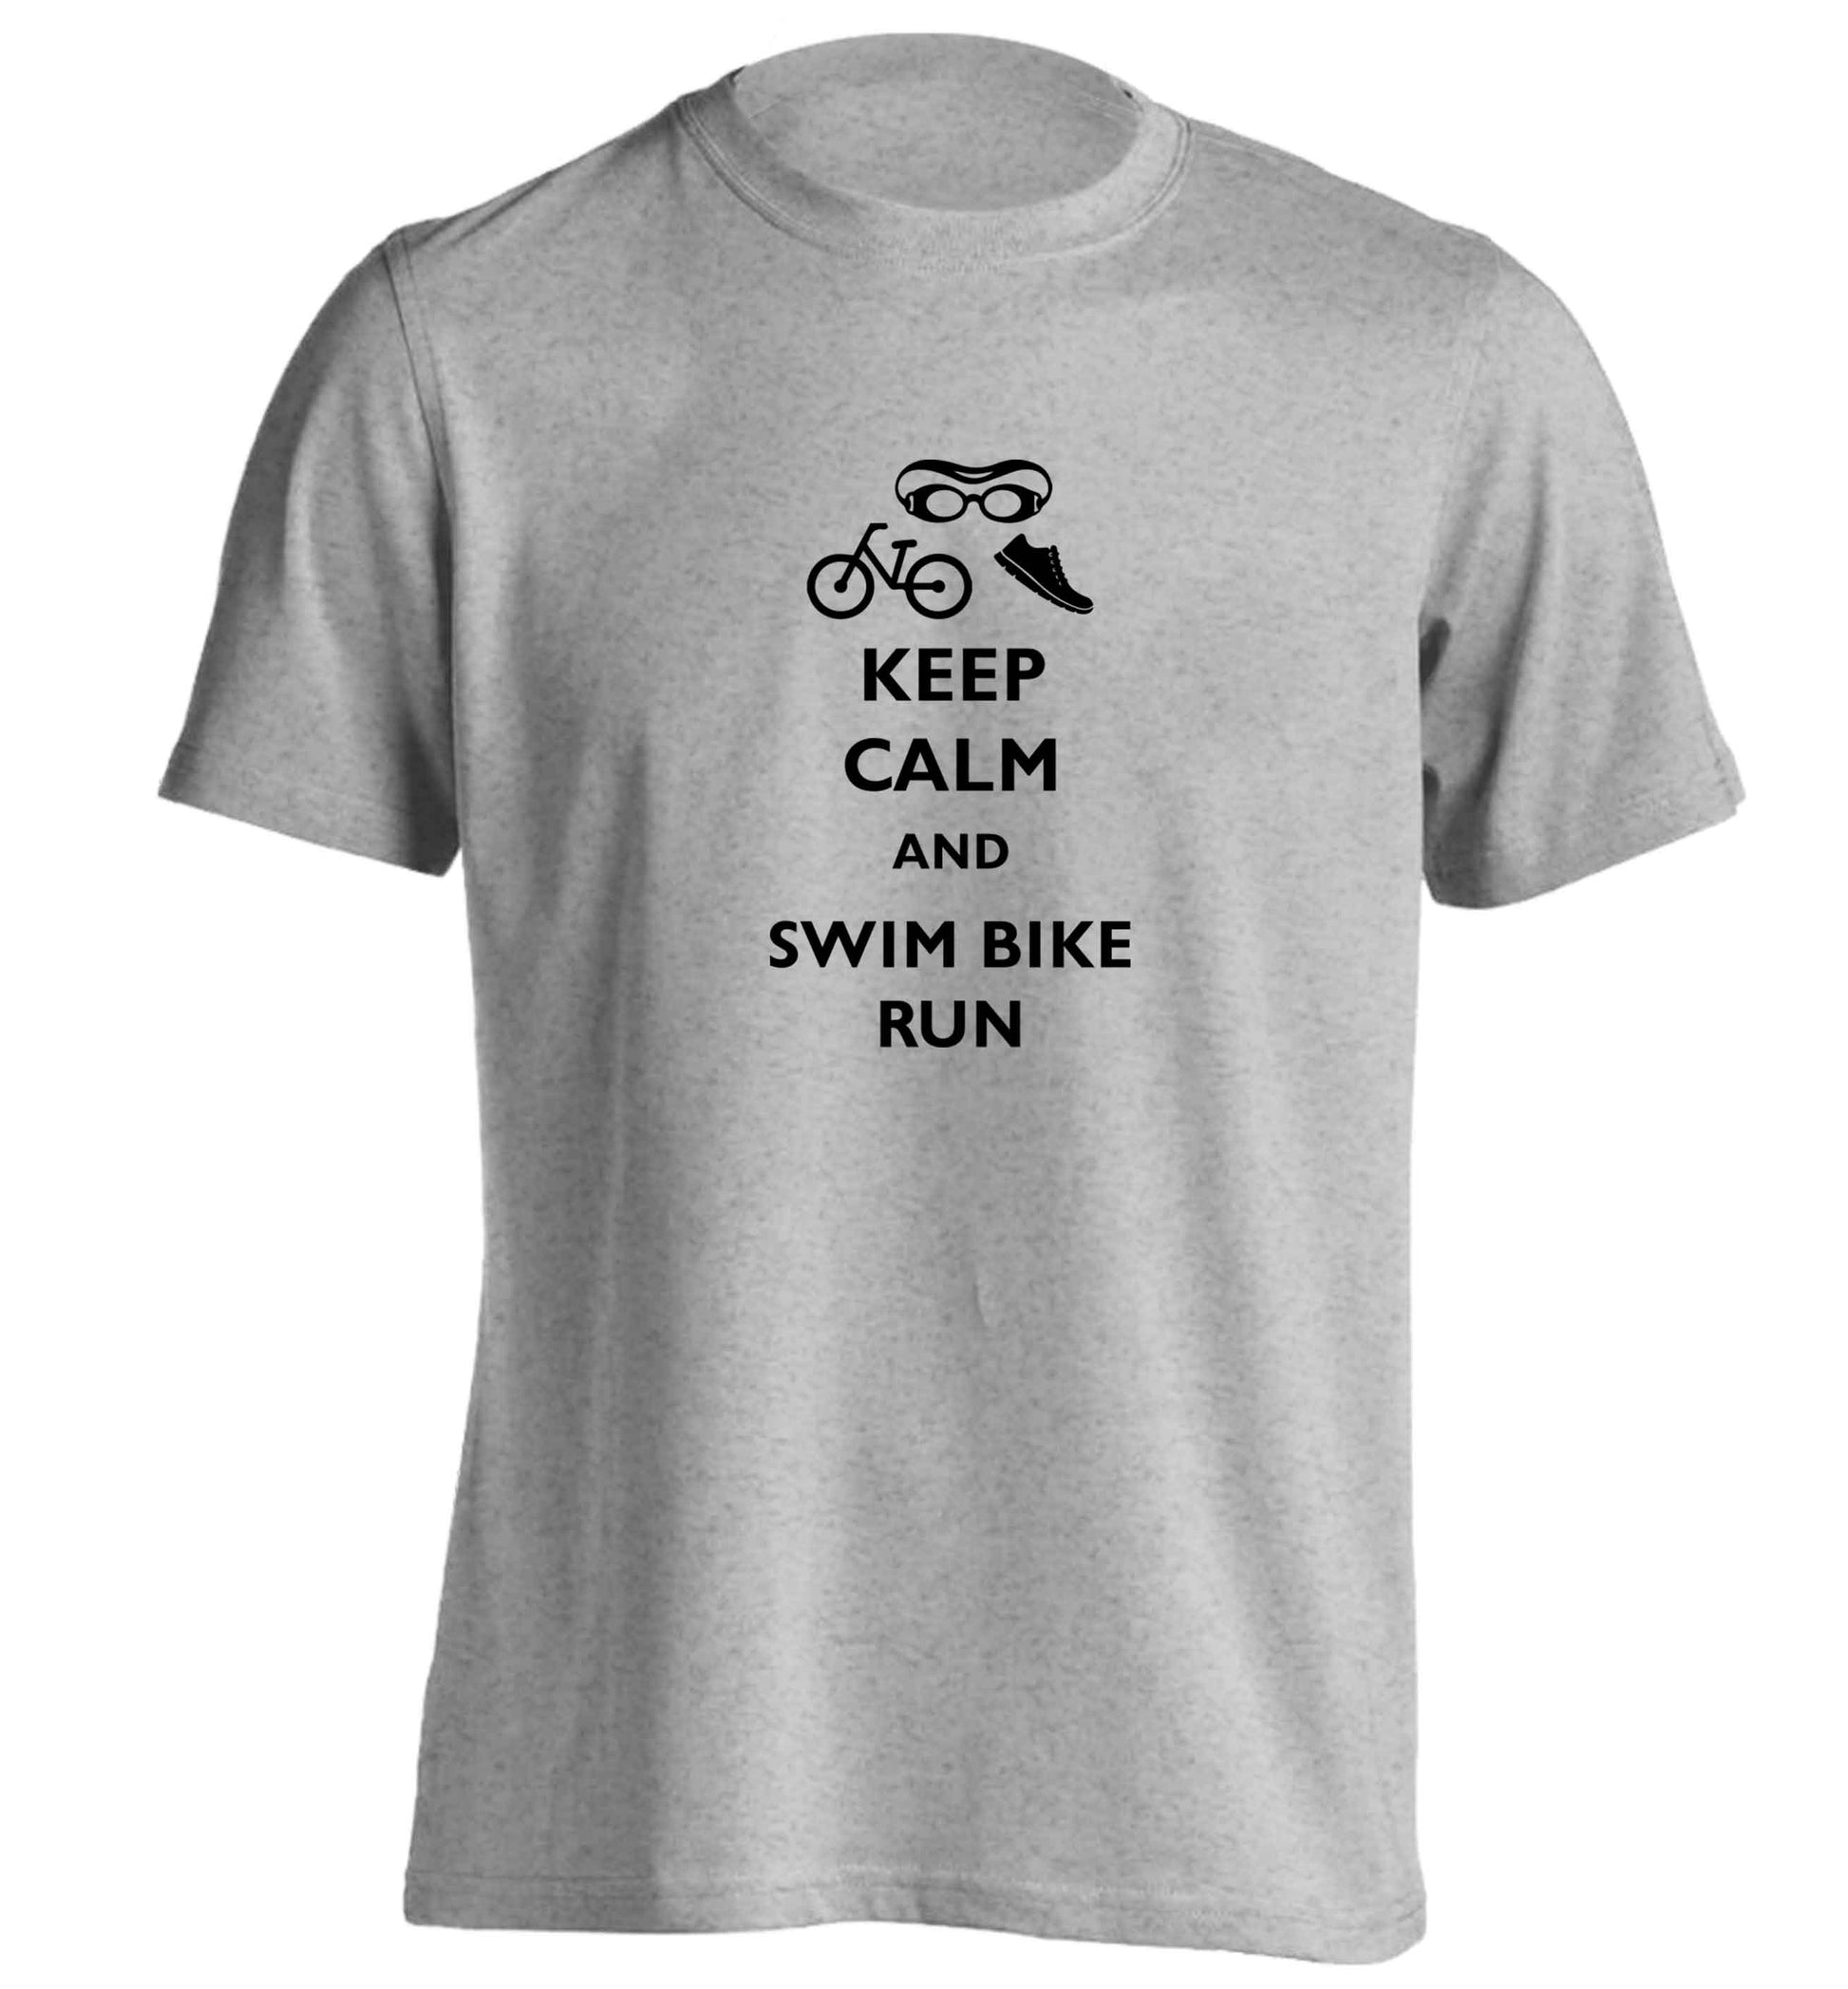 Keep calm and swim bike run adults unisex grey Tshirt 2XL